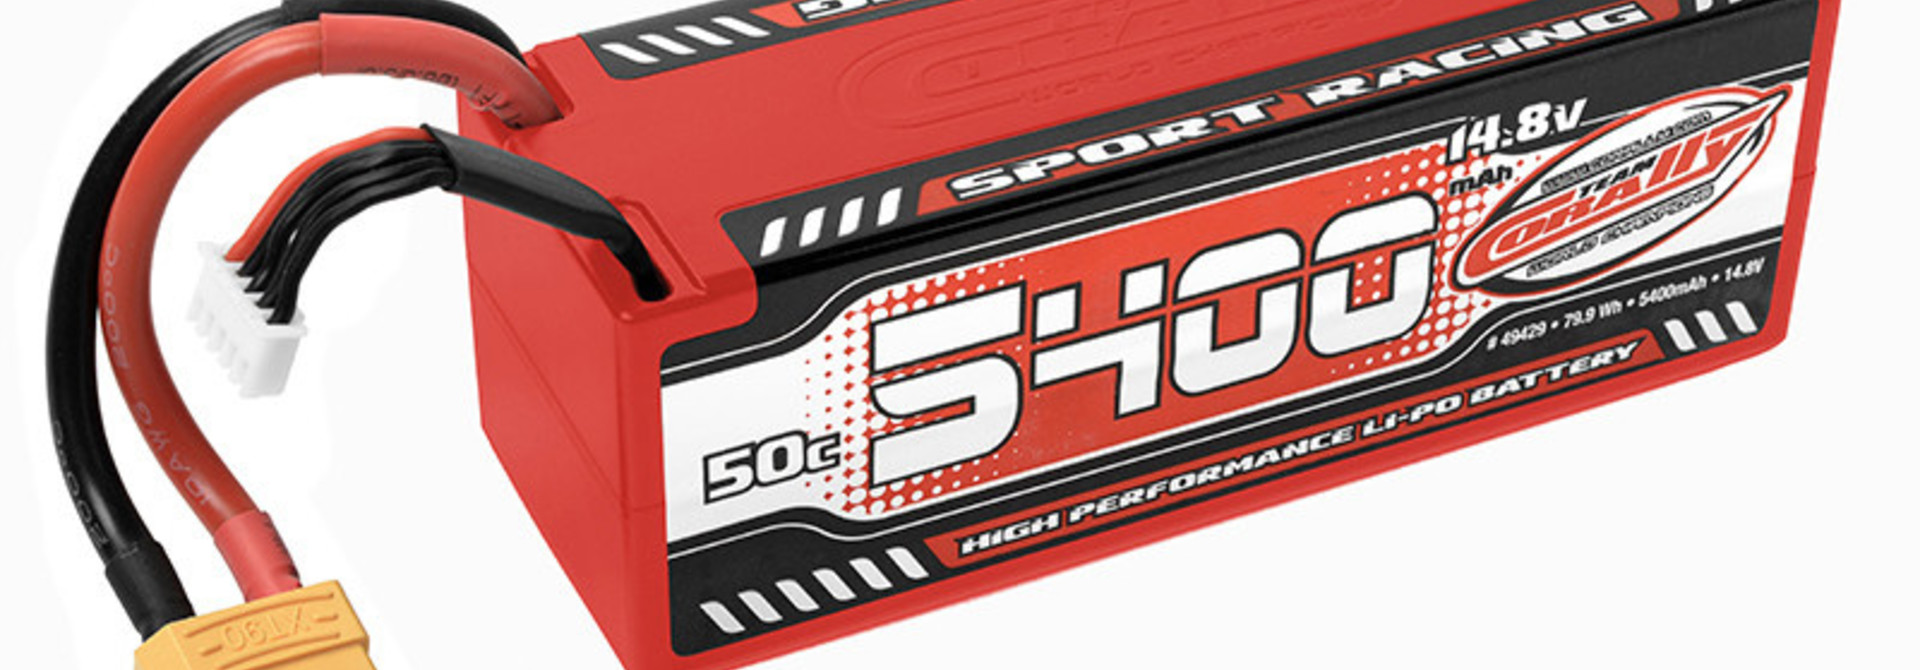 Team Corally - Sport Racing 50C LiPo Battery - 5400mAh - 14.8V - Stick 4S - Hard Wire - XT90